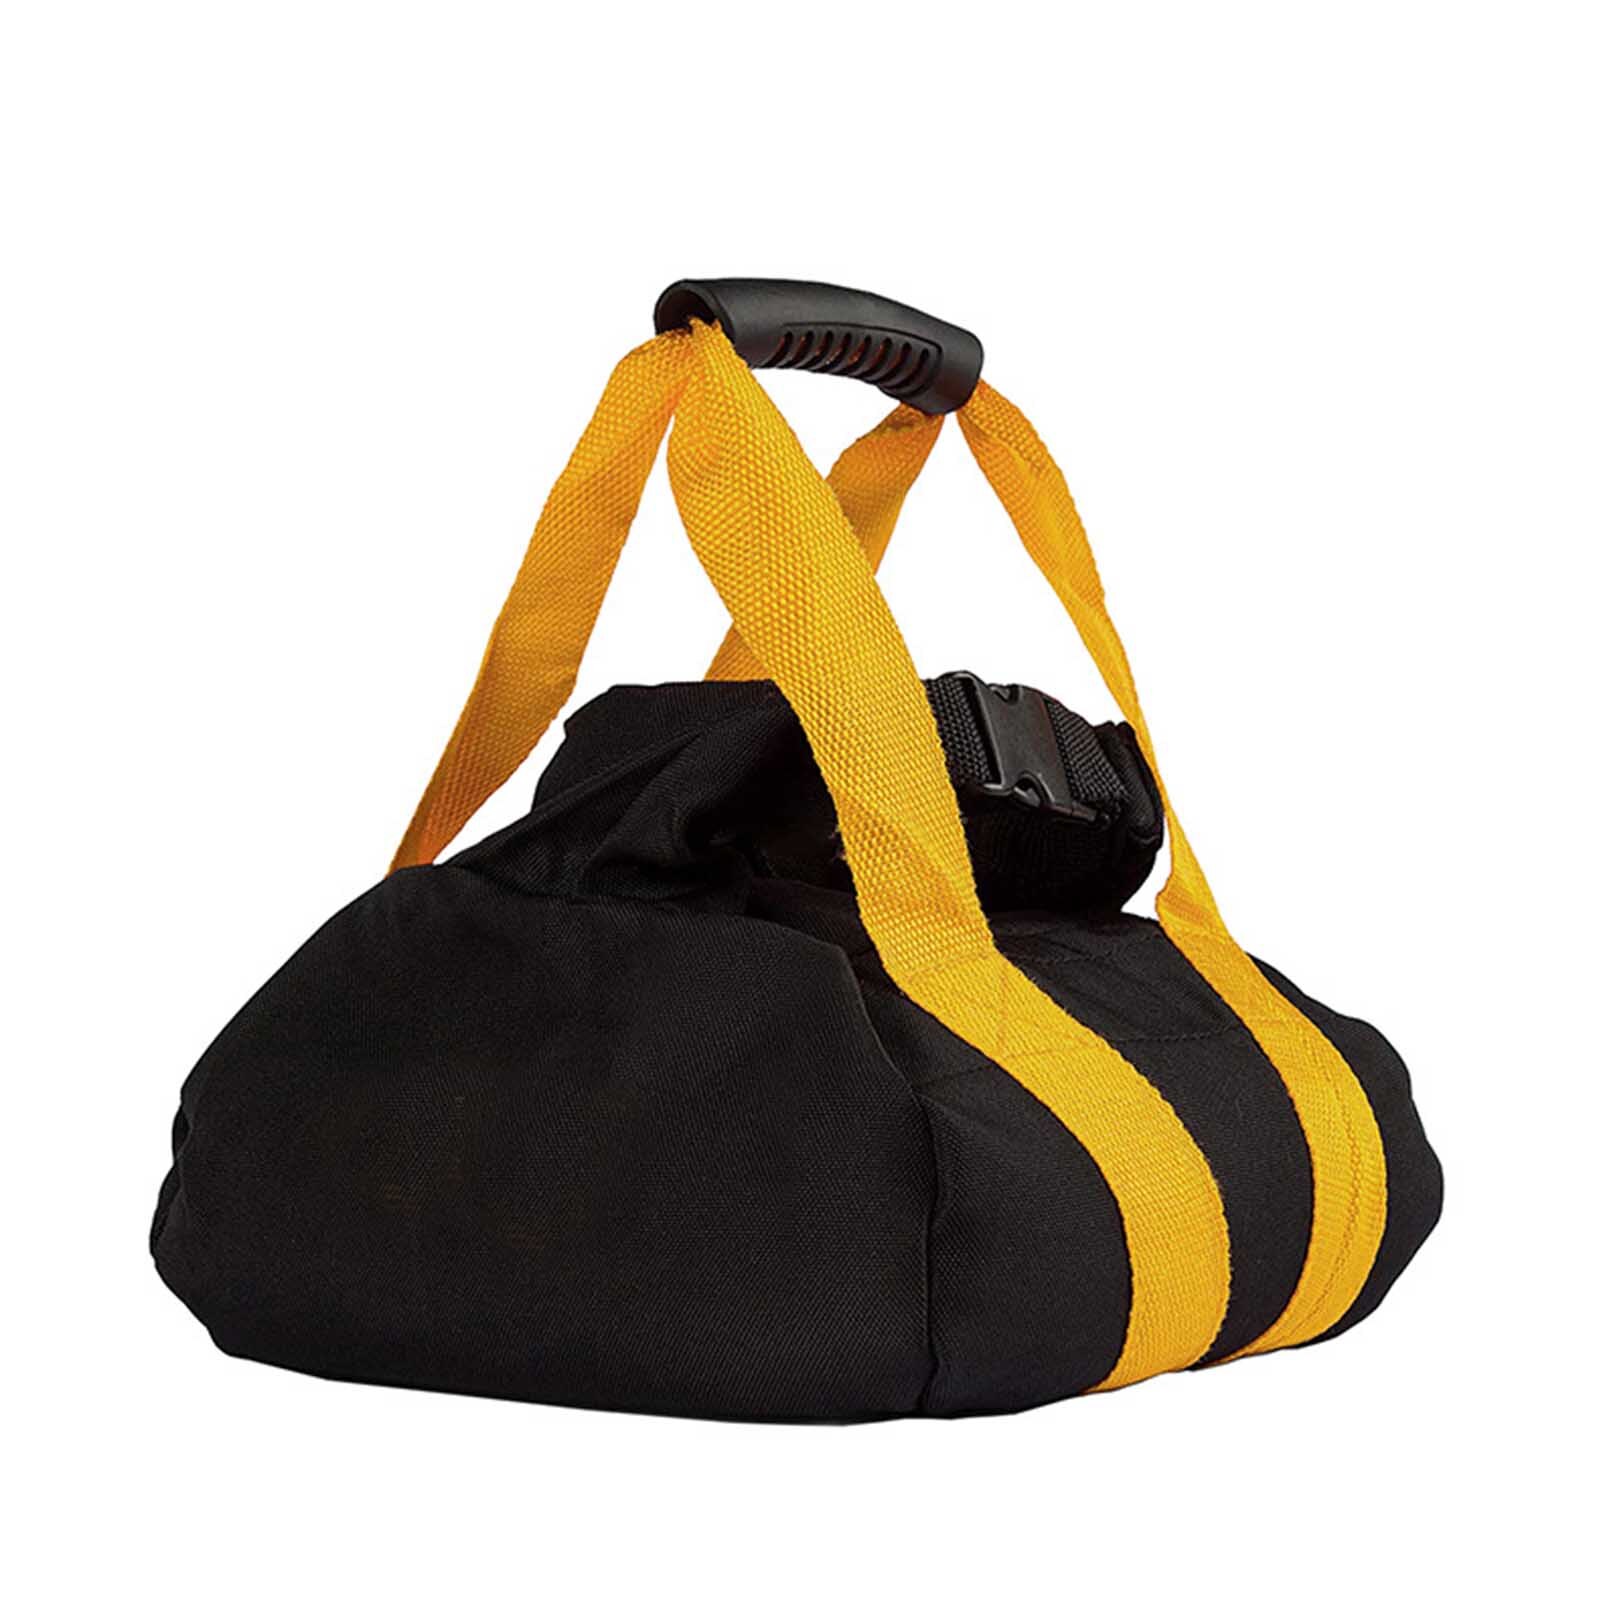 Weightlifting Training Sandbag Multi-Purpose Fitness Power Sandbag Portable And Adjustable Home Training Sandbag For Losing